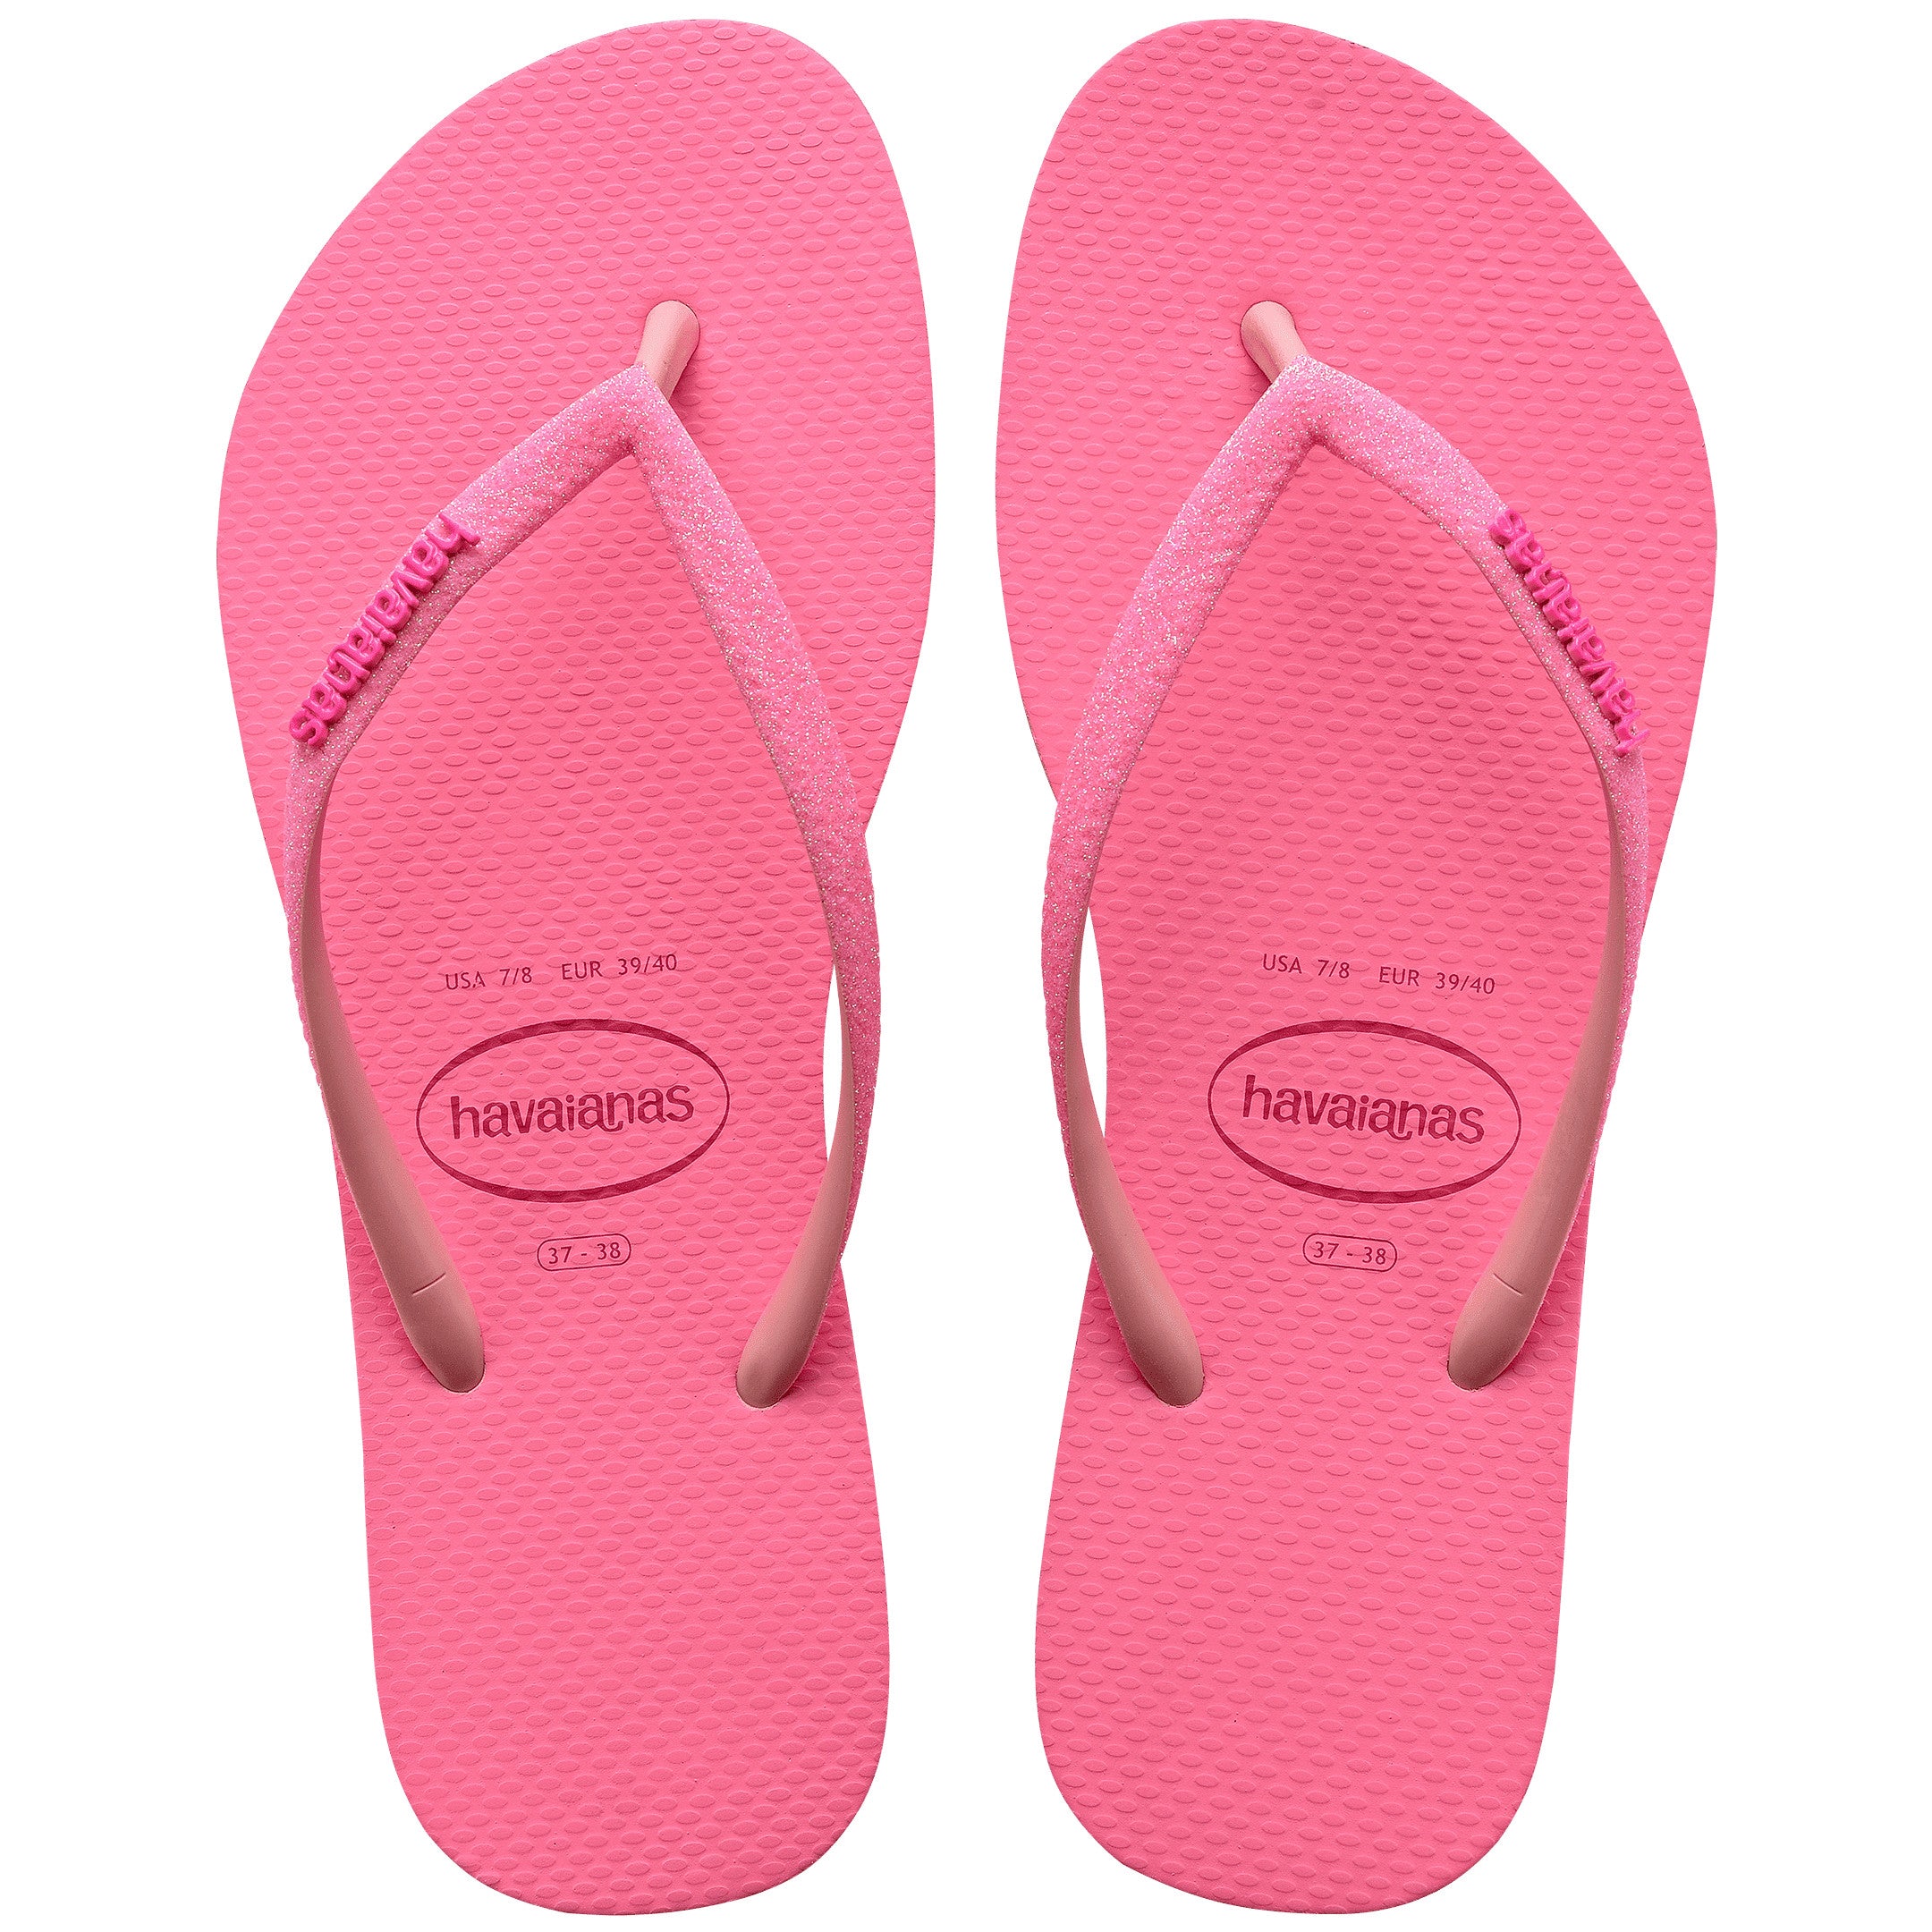 Havaianas Slim Glitter Neon Womens Sandal 5217-Macaron Pink 7